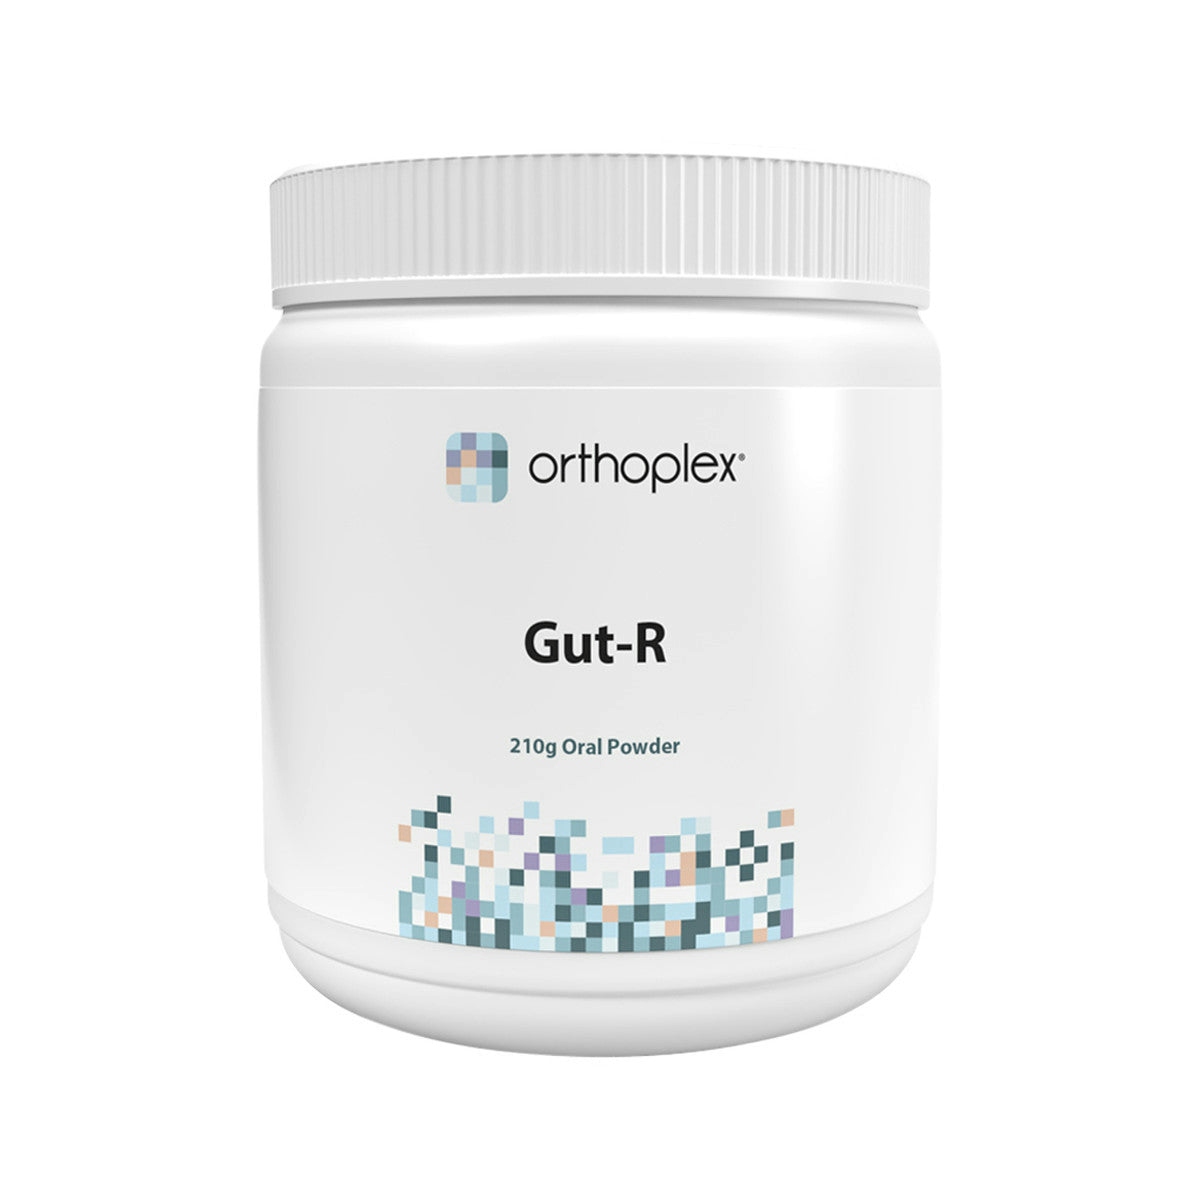 image of Orthoplex White Gut R Oral Powder 210g on white background